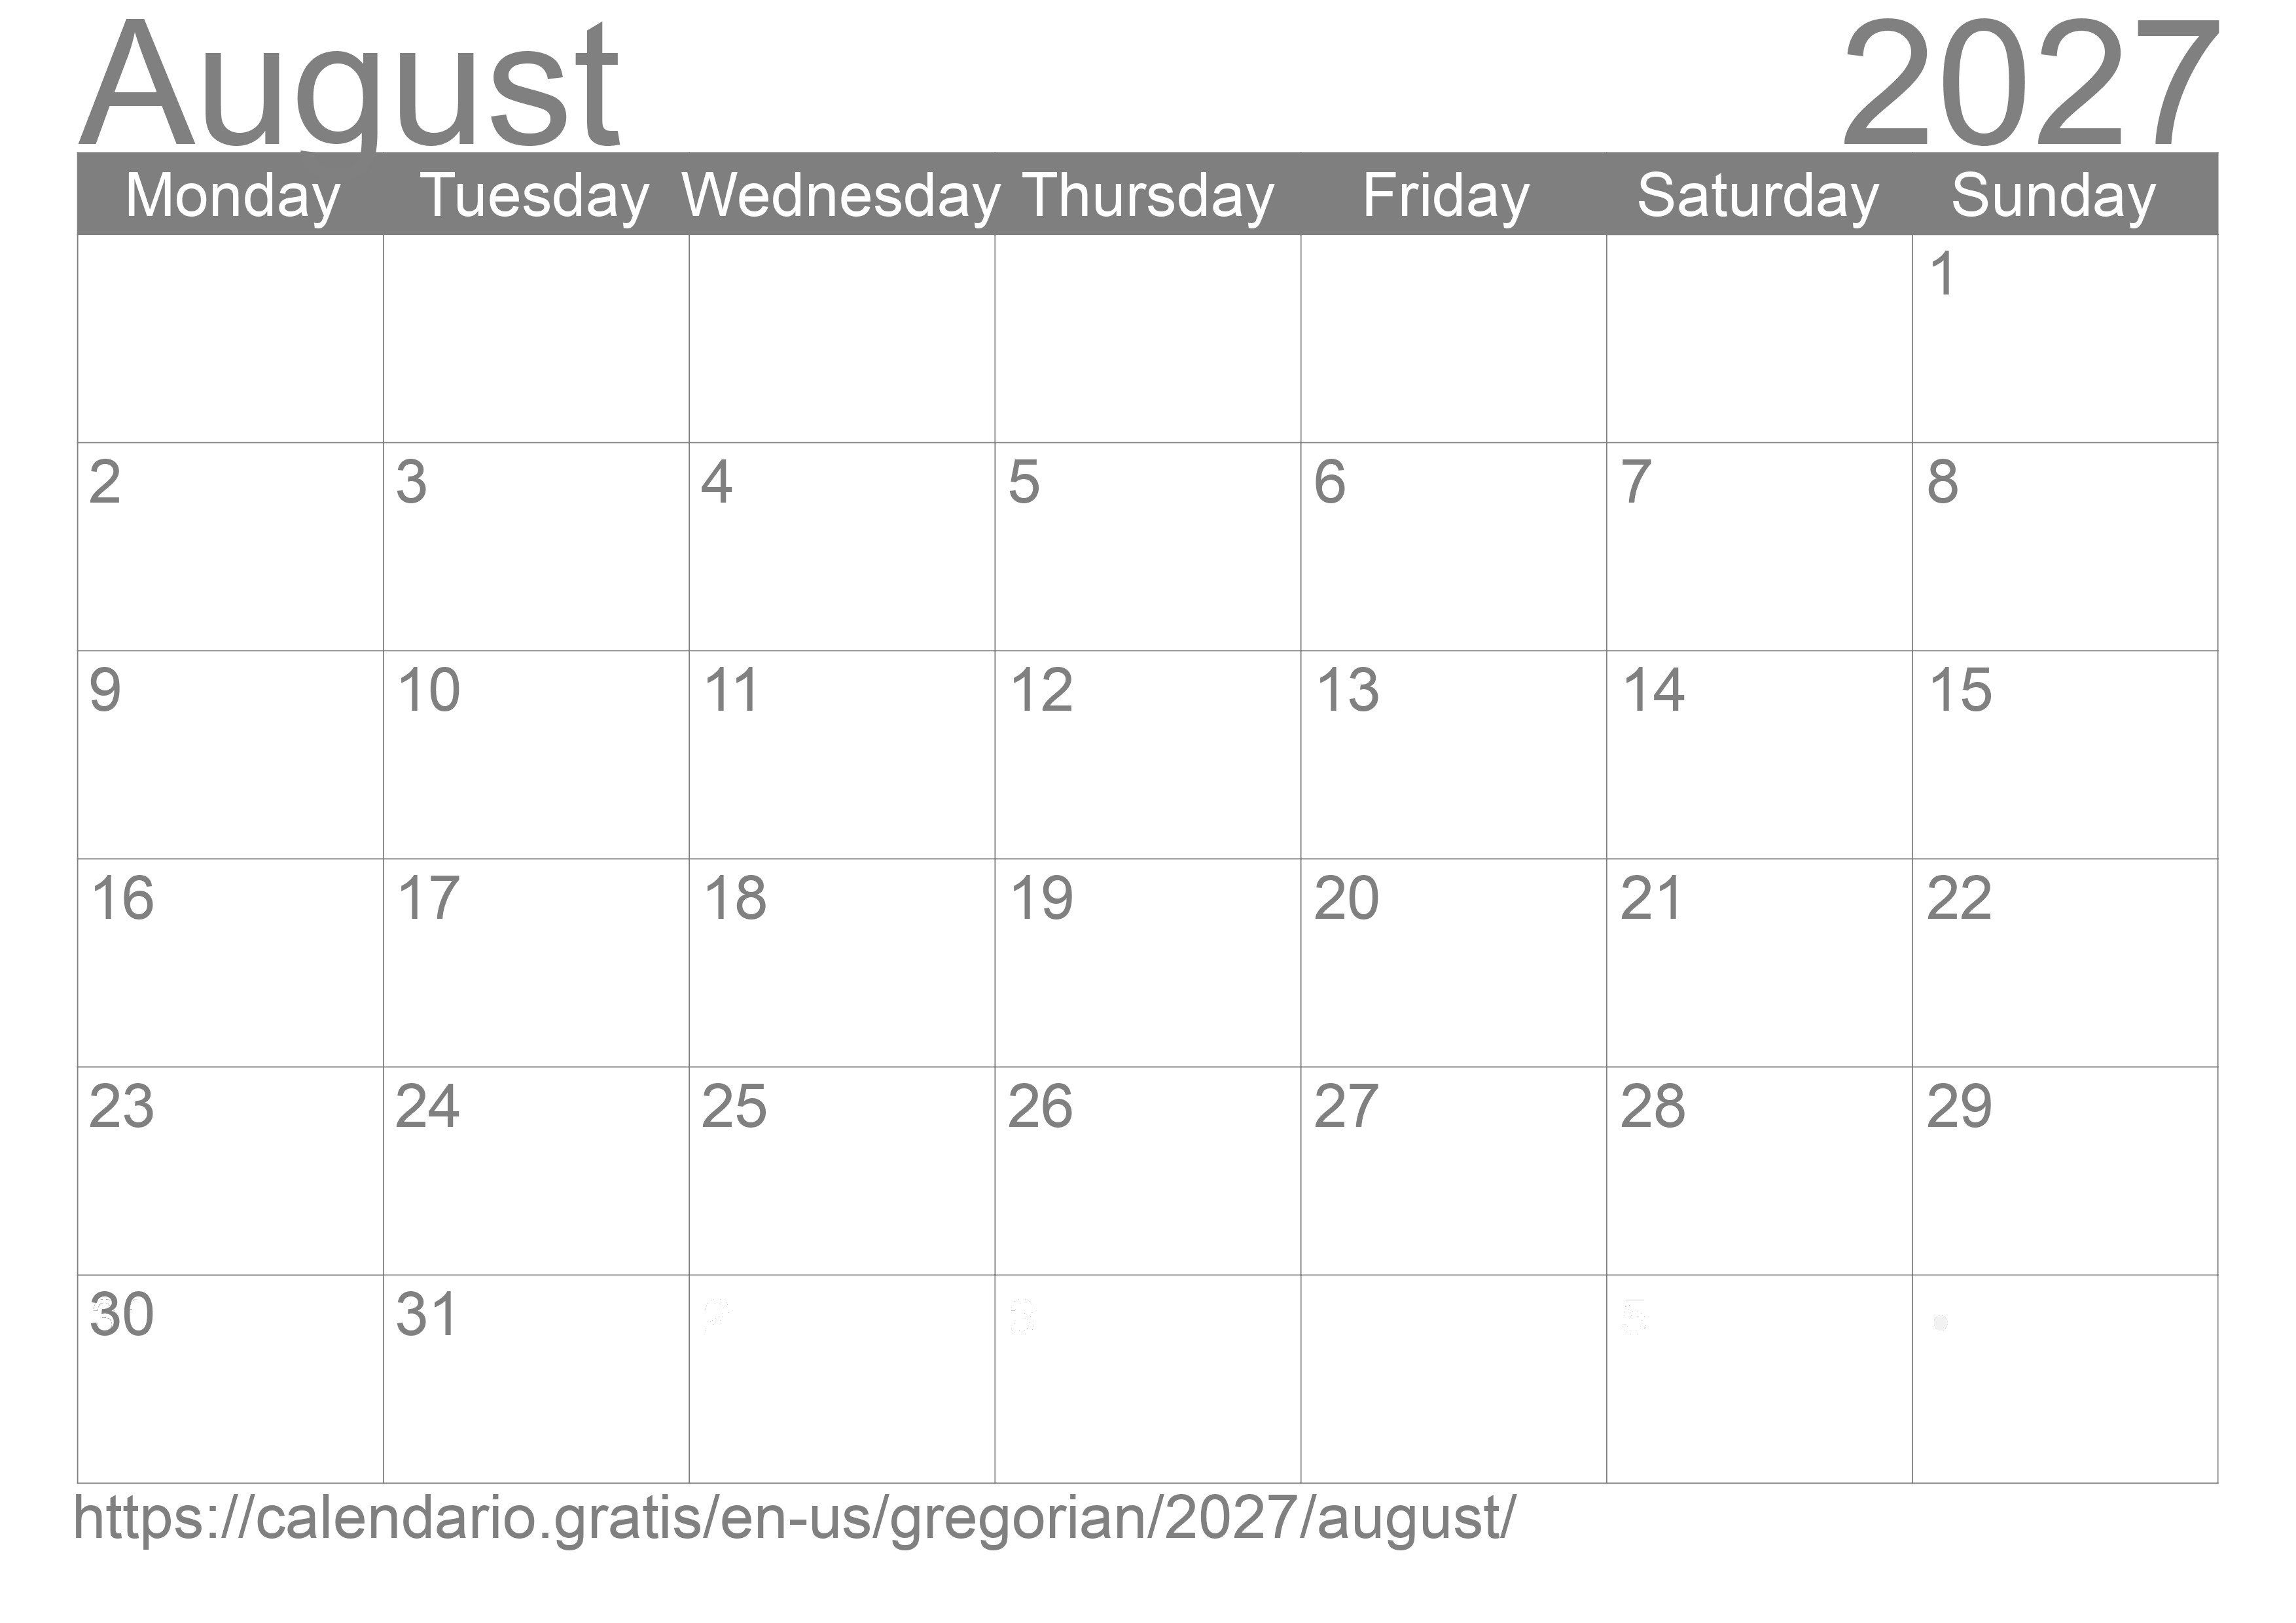 Calendar August 2027 to print